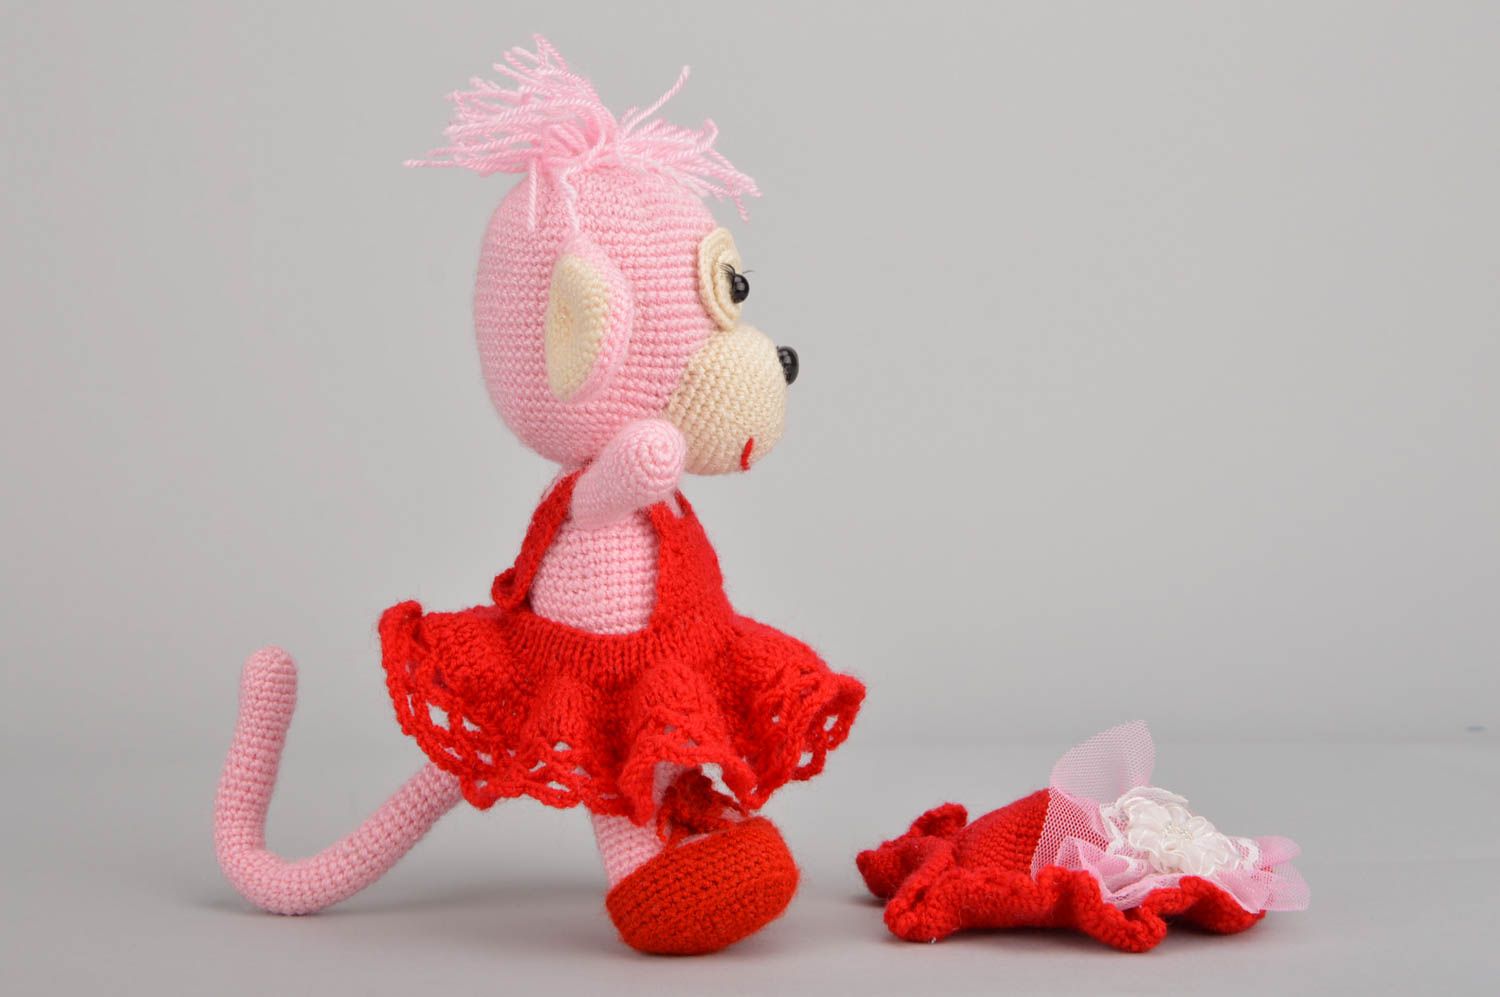 Beautiful homemade crochet toy handmade soft toy for kids nursery design photo 4